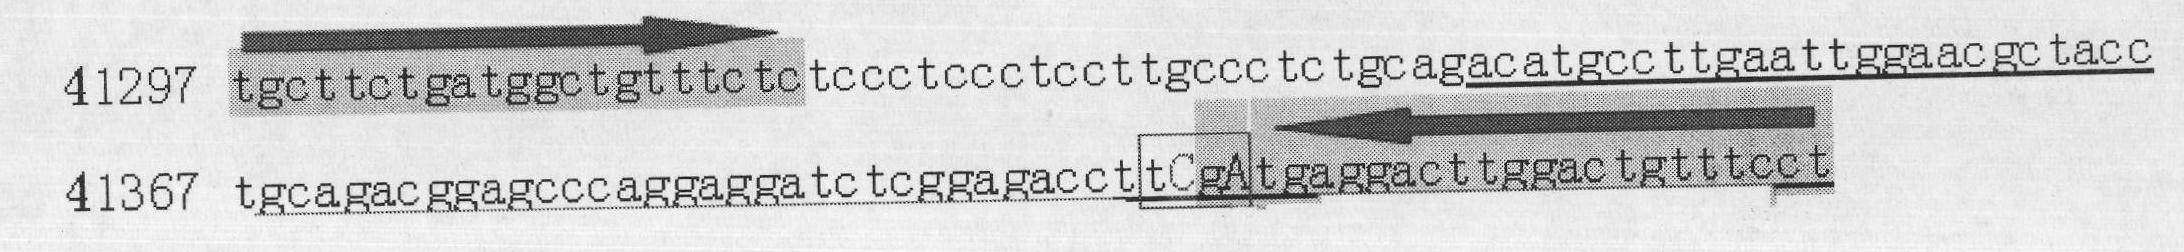 Method for detecting single nucleotide polymorphism of cattle krupple-like factor (KLF) 7 gene